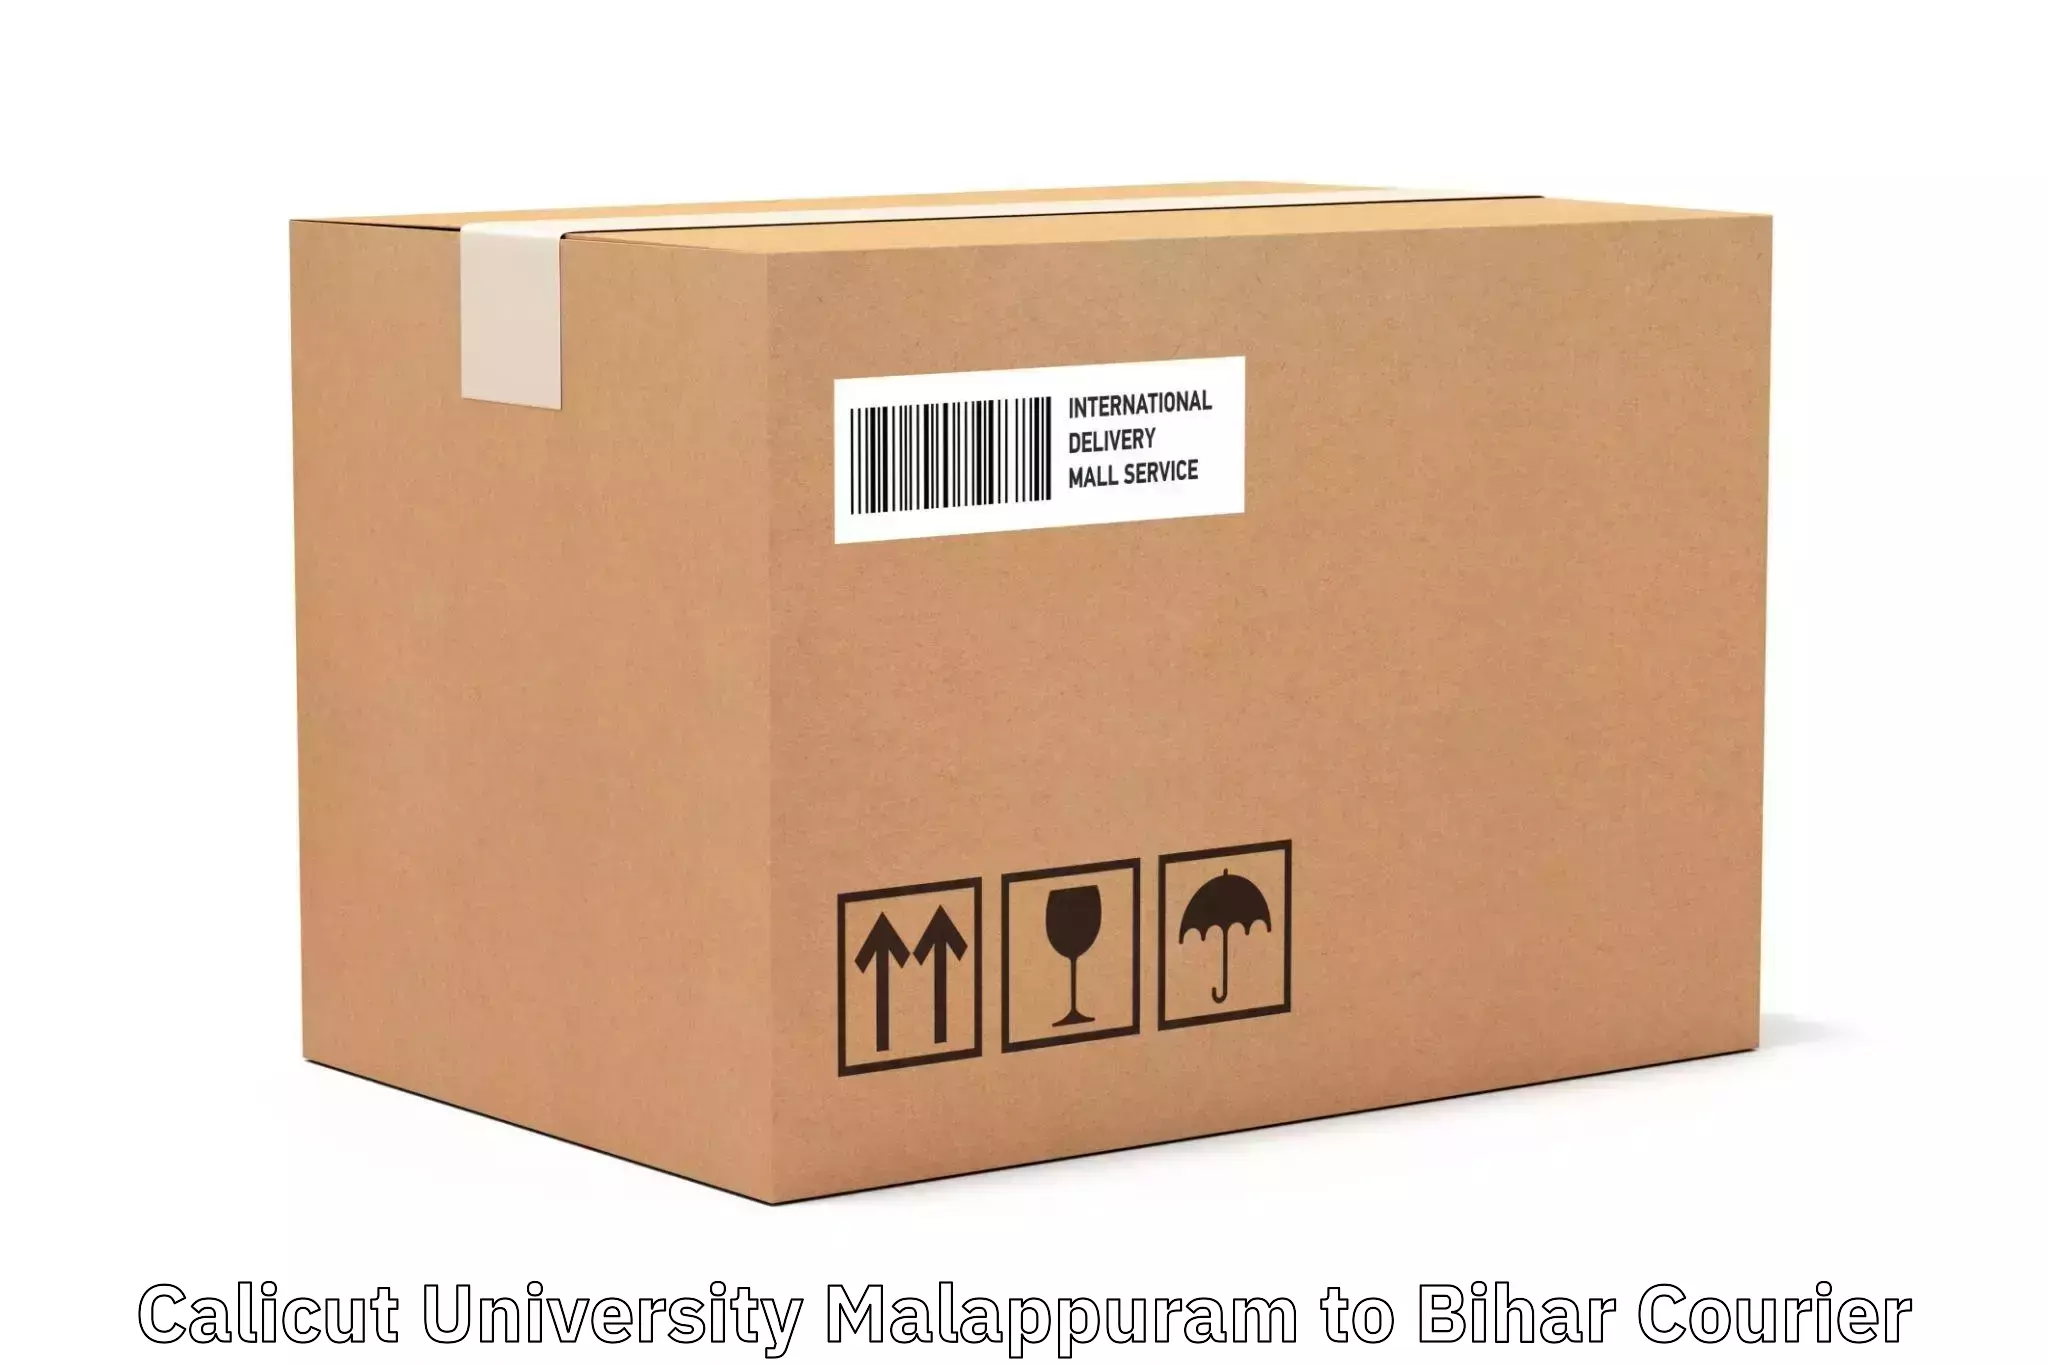 Custom courier packages Calicut University Malappuram to Rohtas